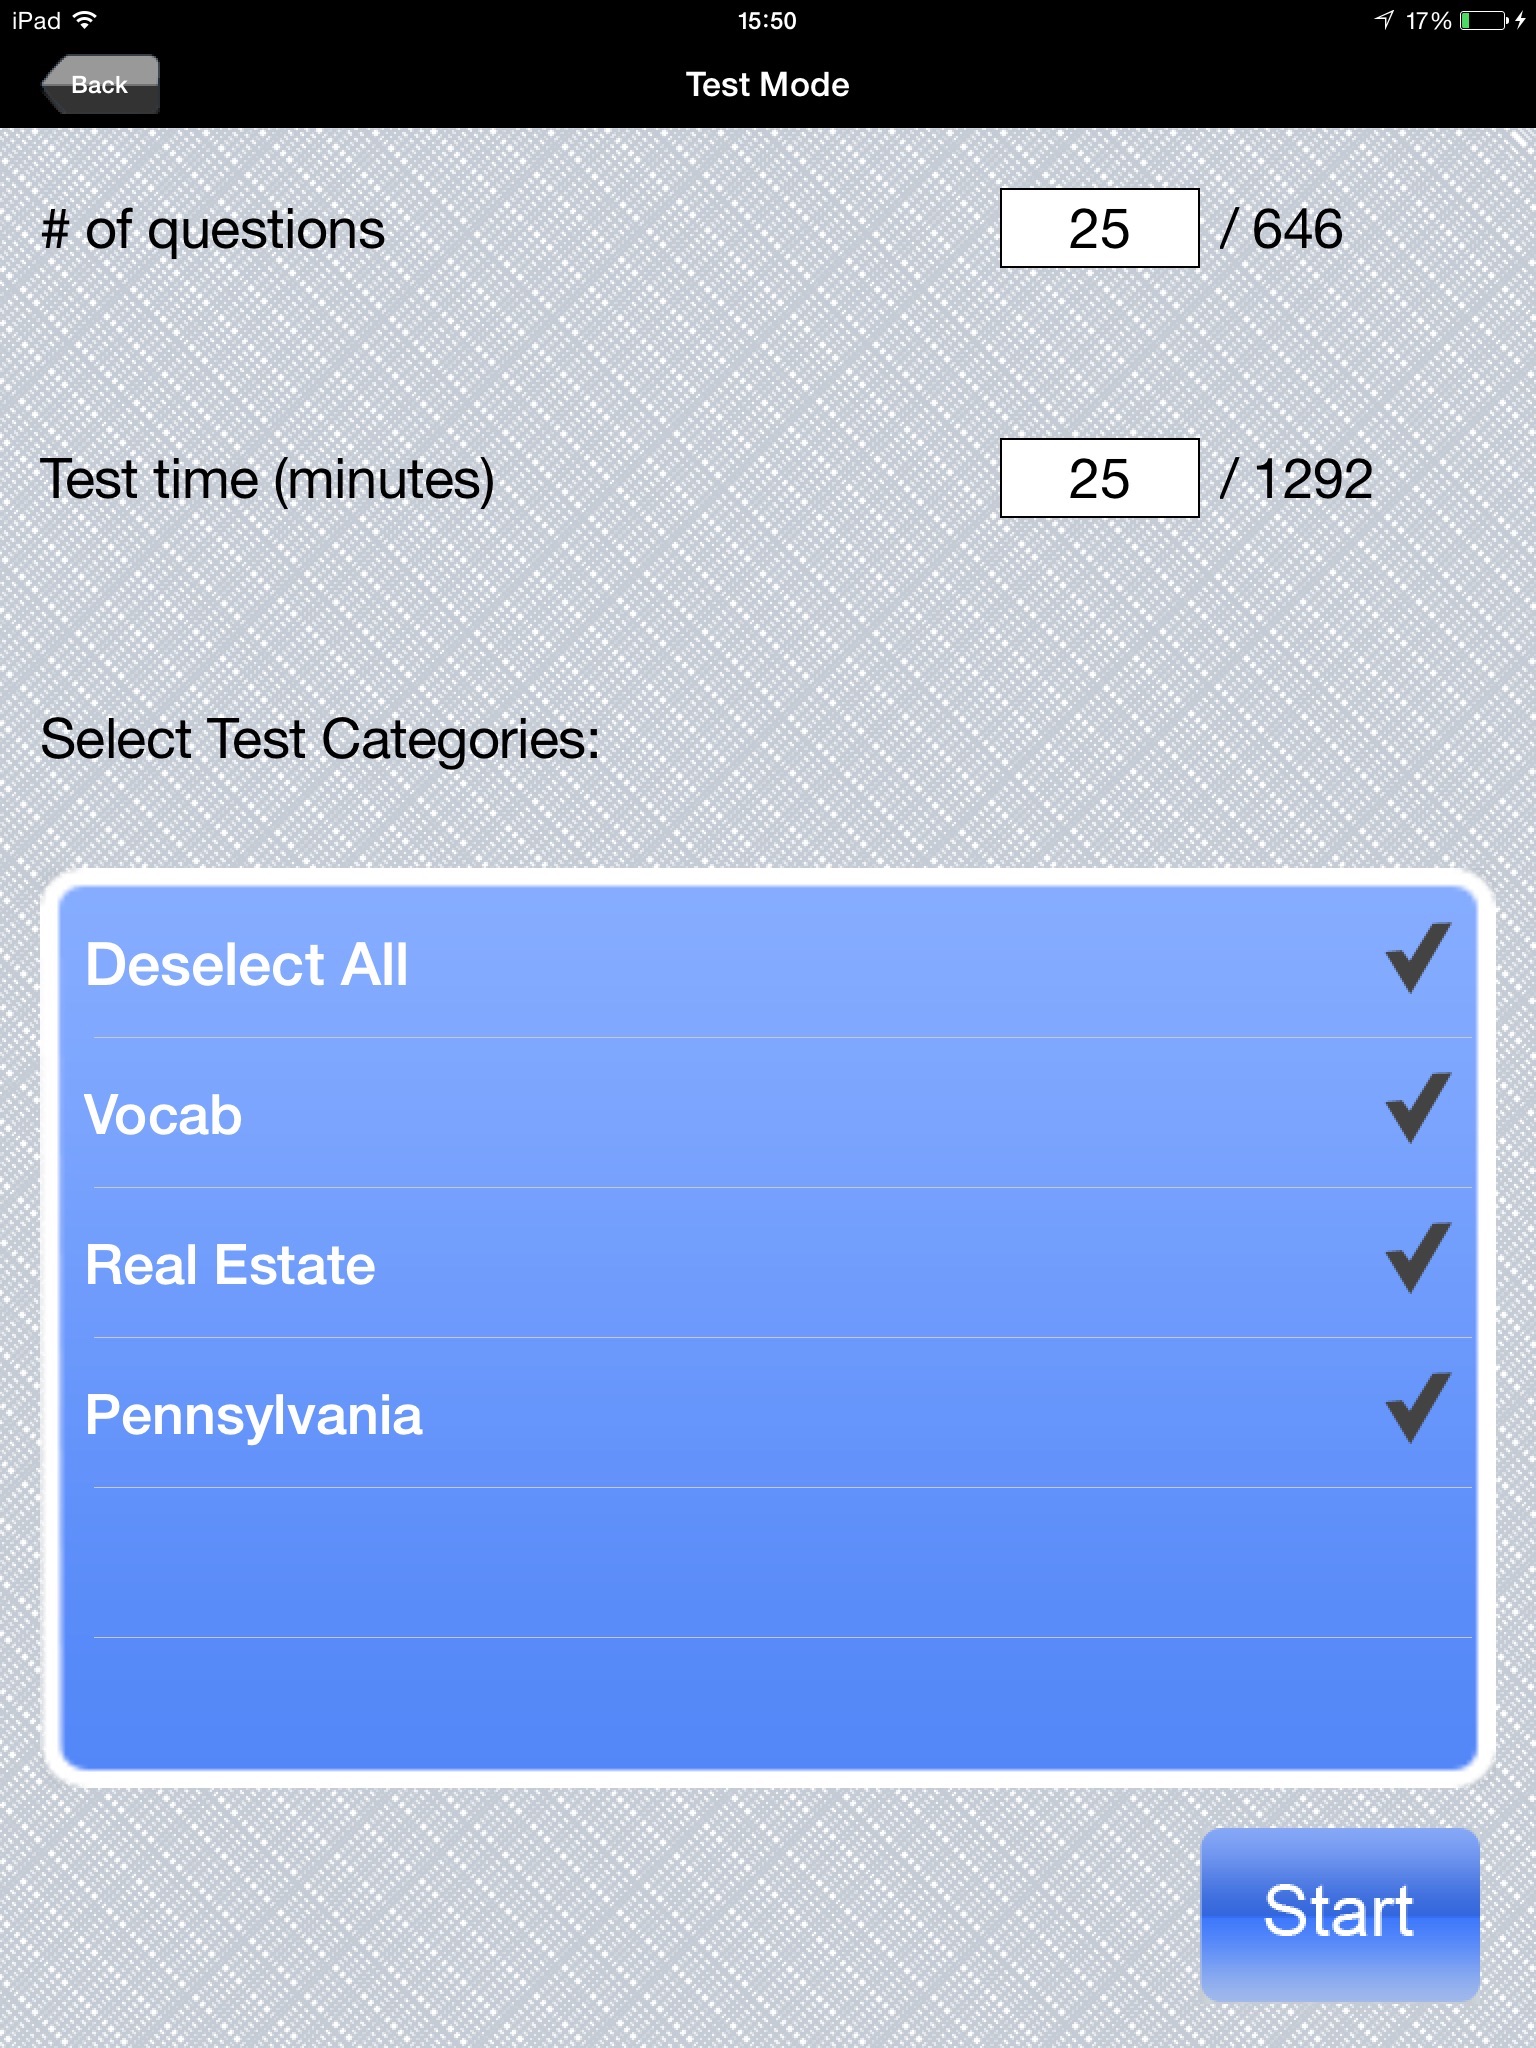 PA Real Estate Exam Prep screenshot 4